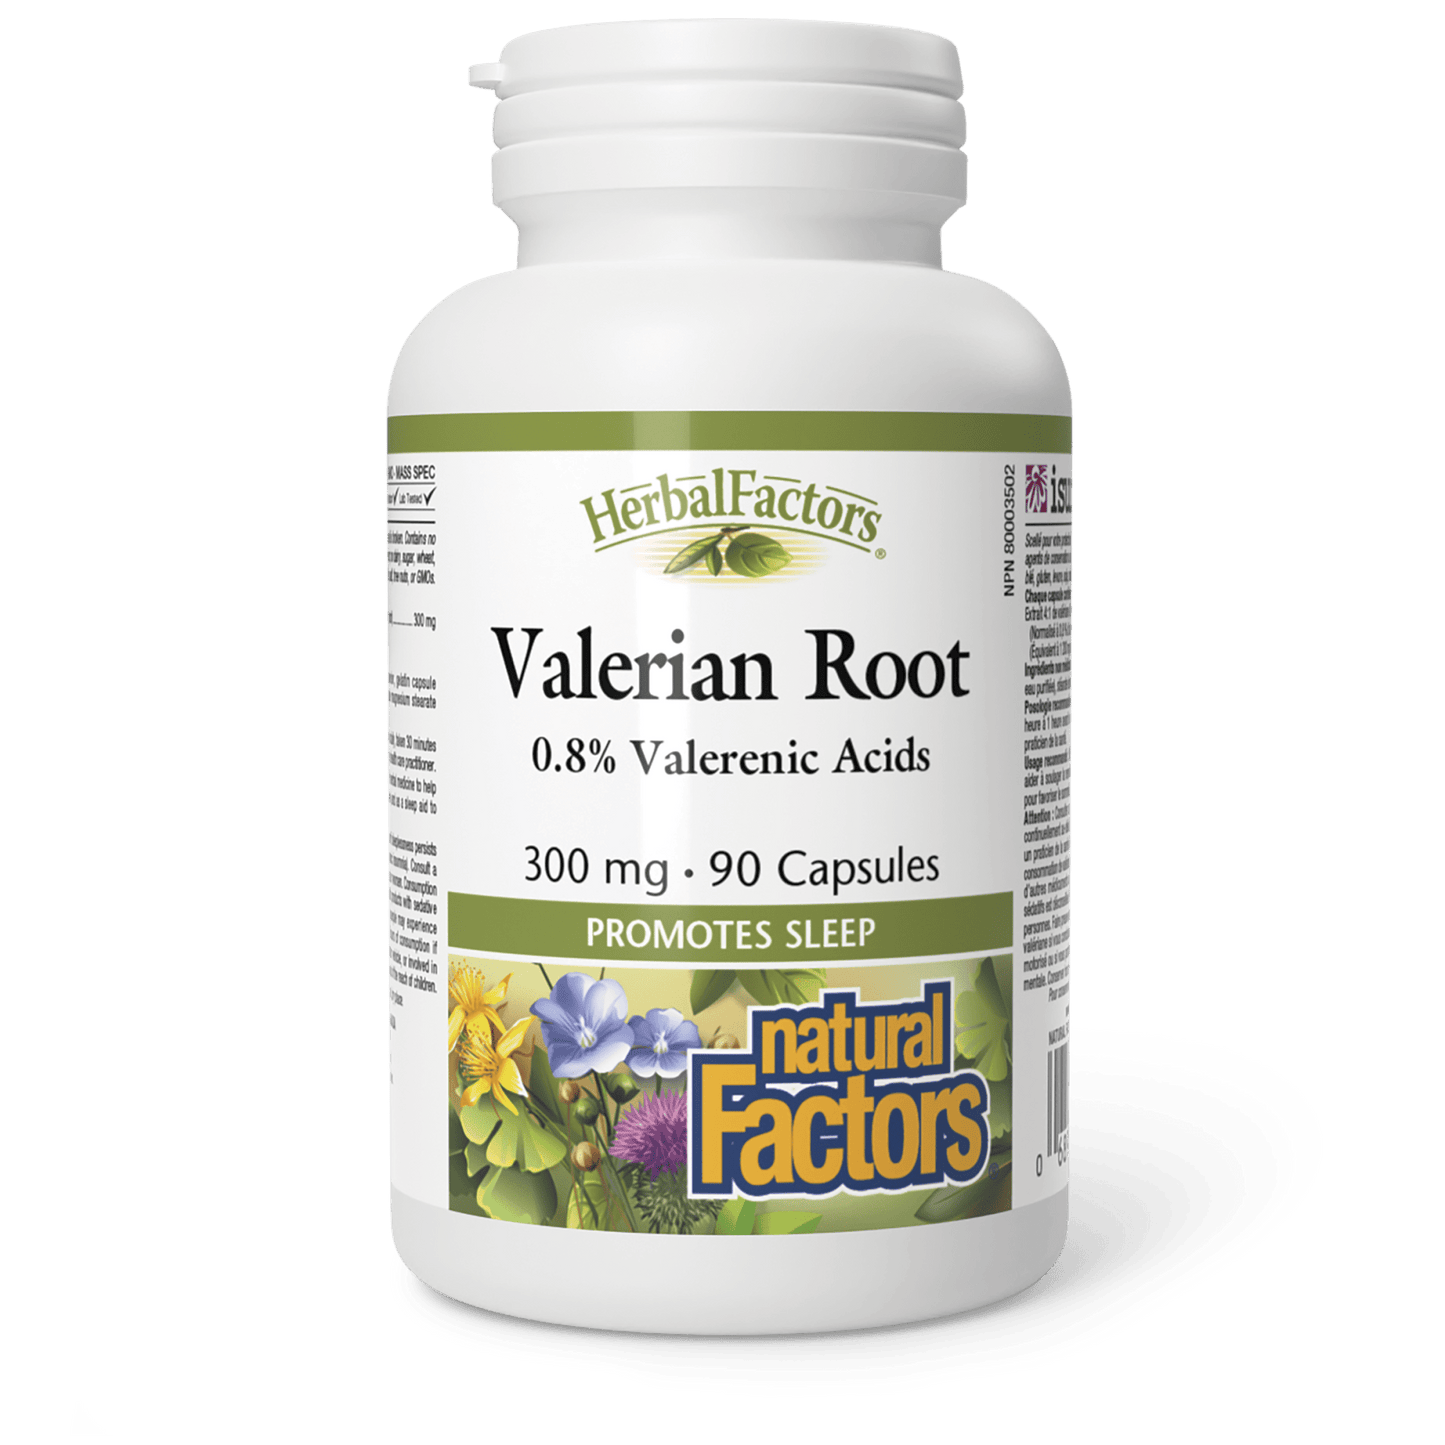 Valerian Root 300 mg, HerbalFactors, Natural Factors|v|image|4565